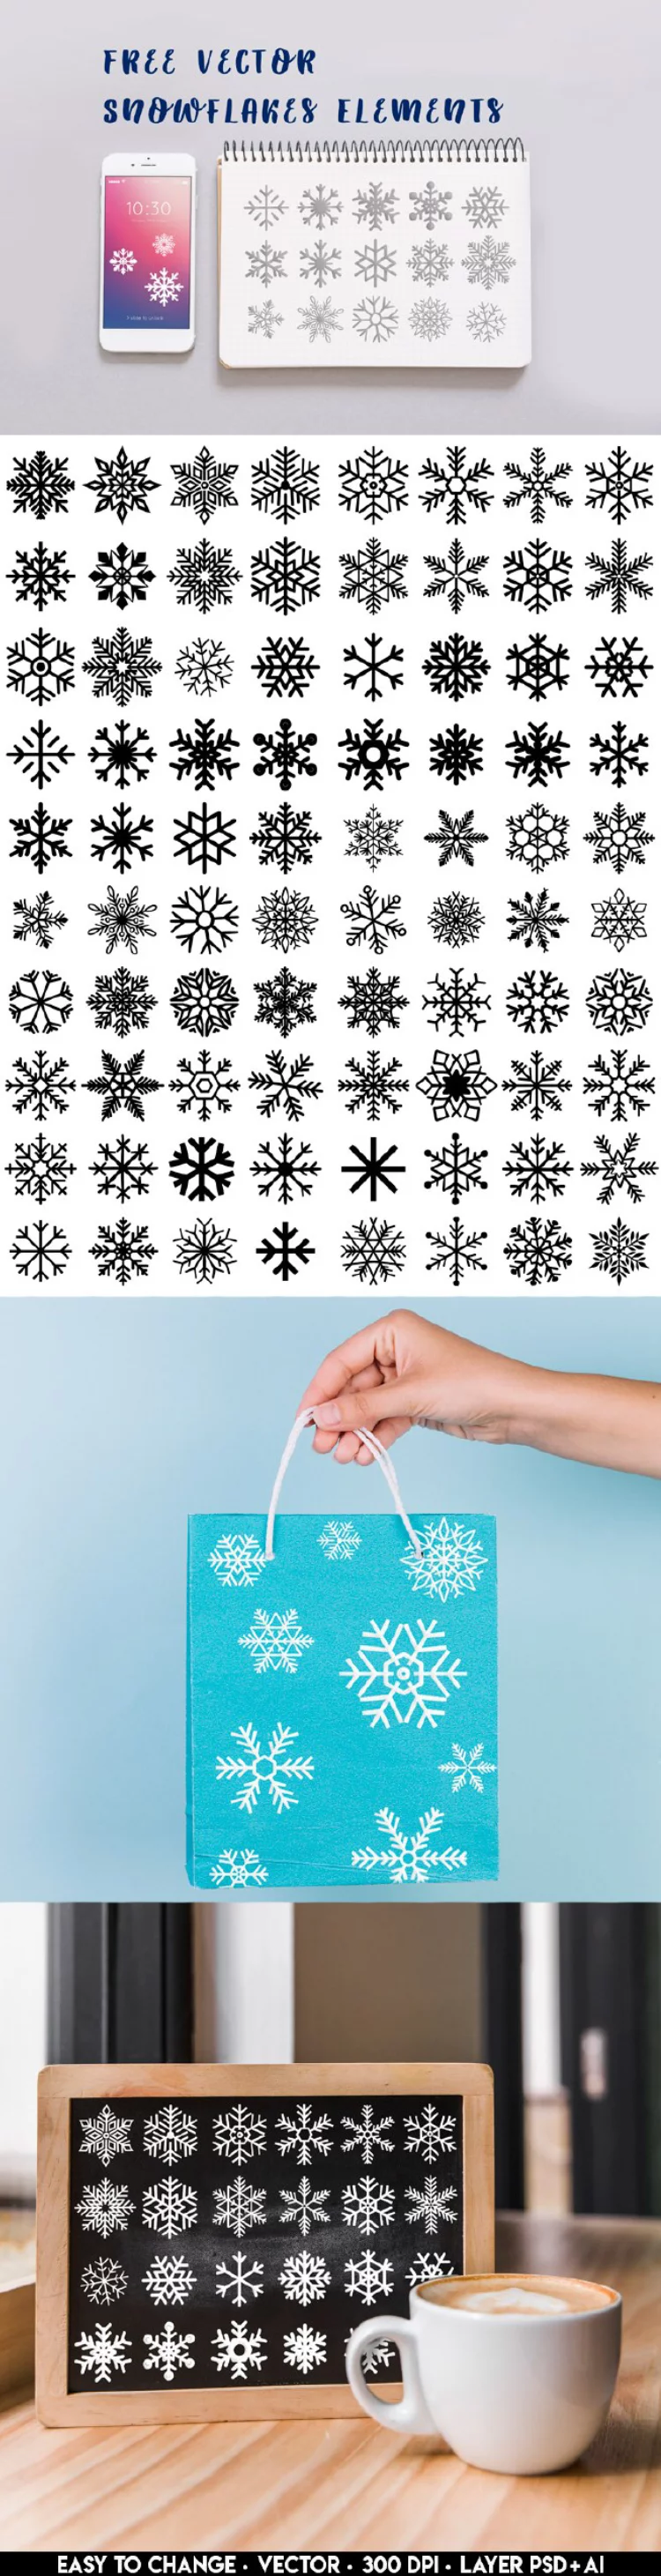 Free Vector Snowflakes Elements